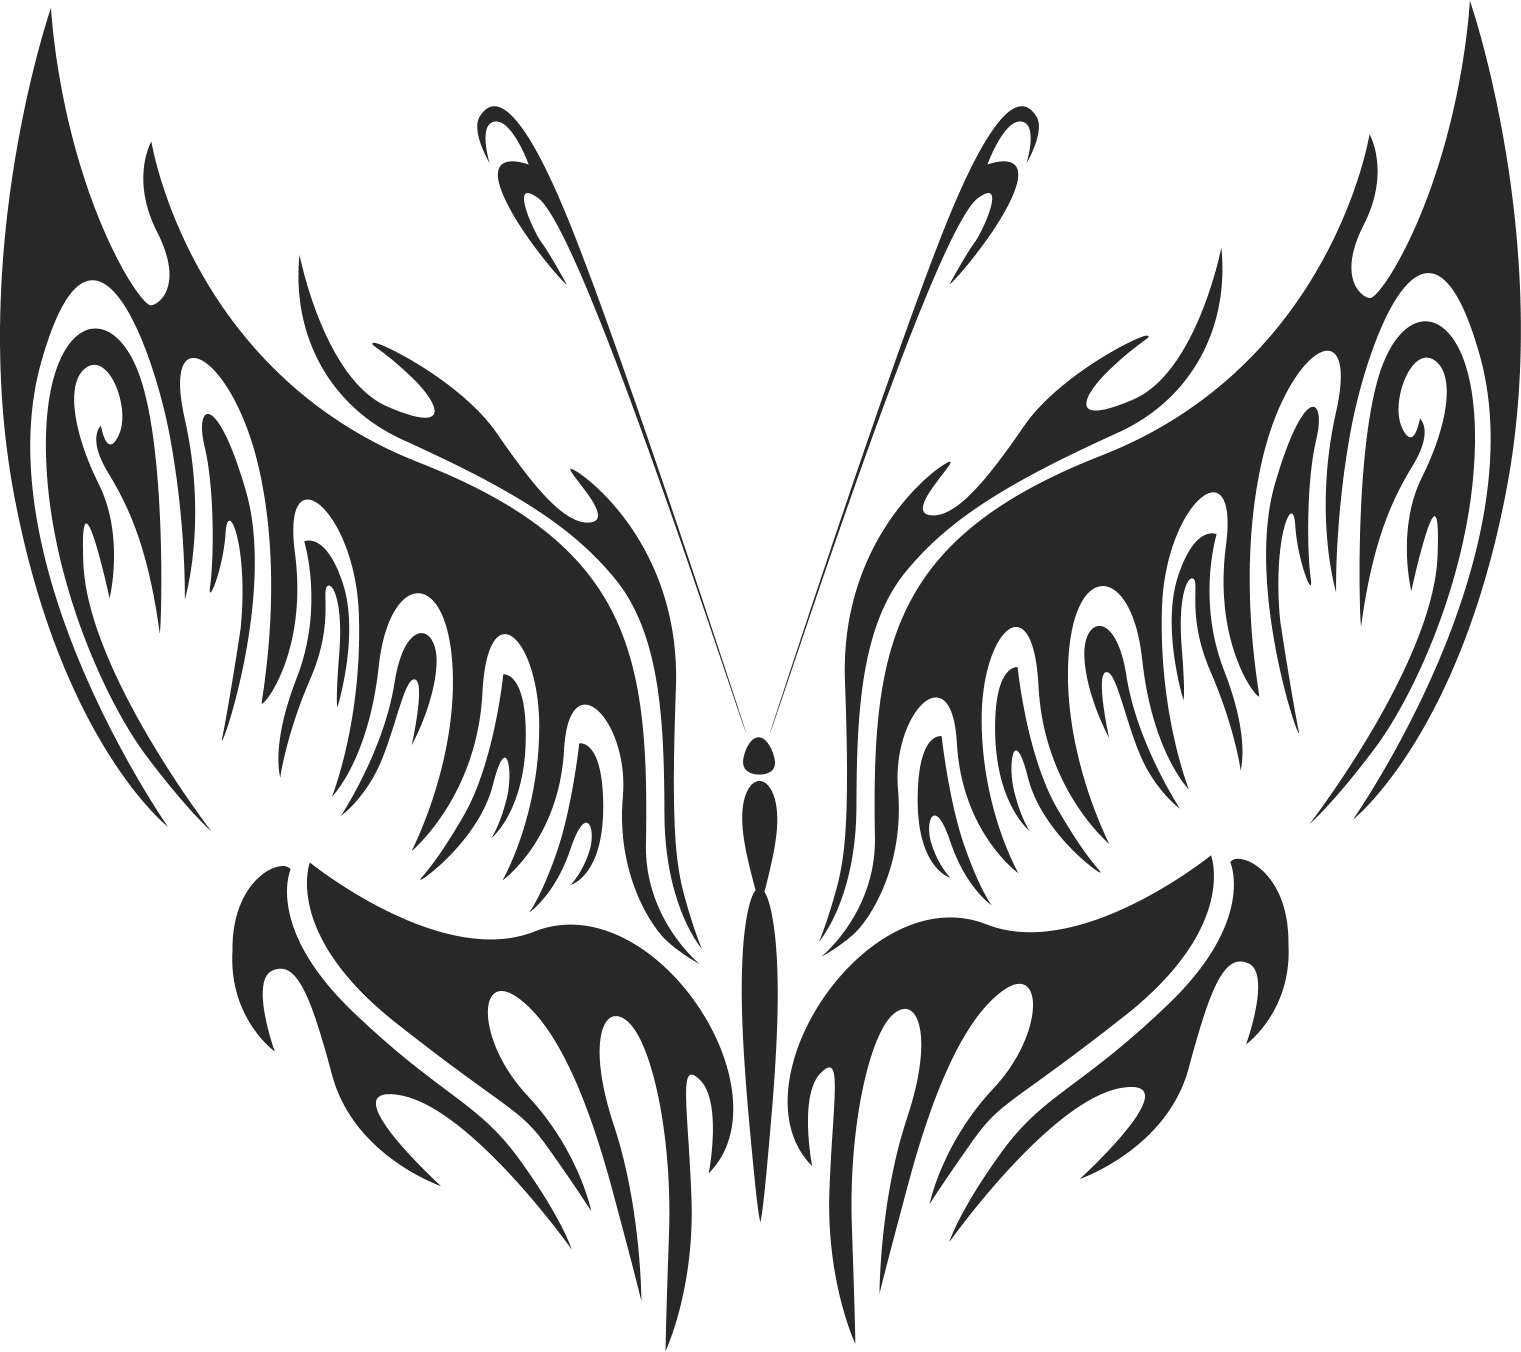 Tribal Butterfly Metal Plasma Art Vector Free DXF Vectors File